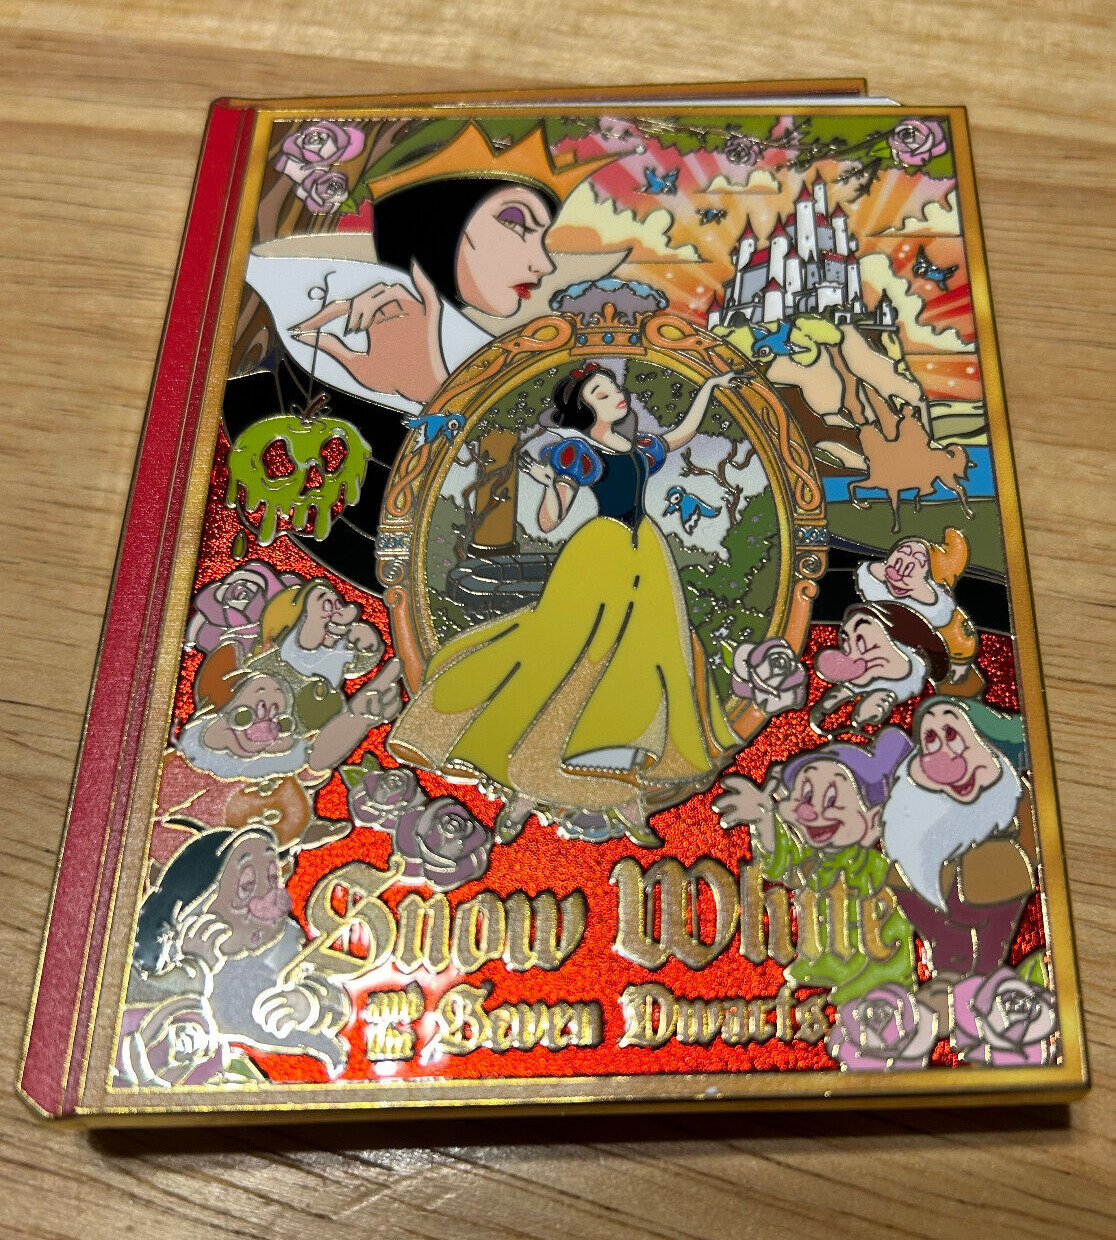 Snow White and Seven Dwarfs Castle Fantasy Disney Kriss Storytime Pin LE JUMBO